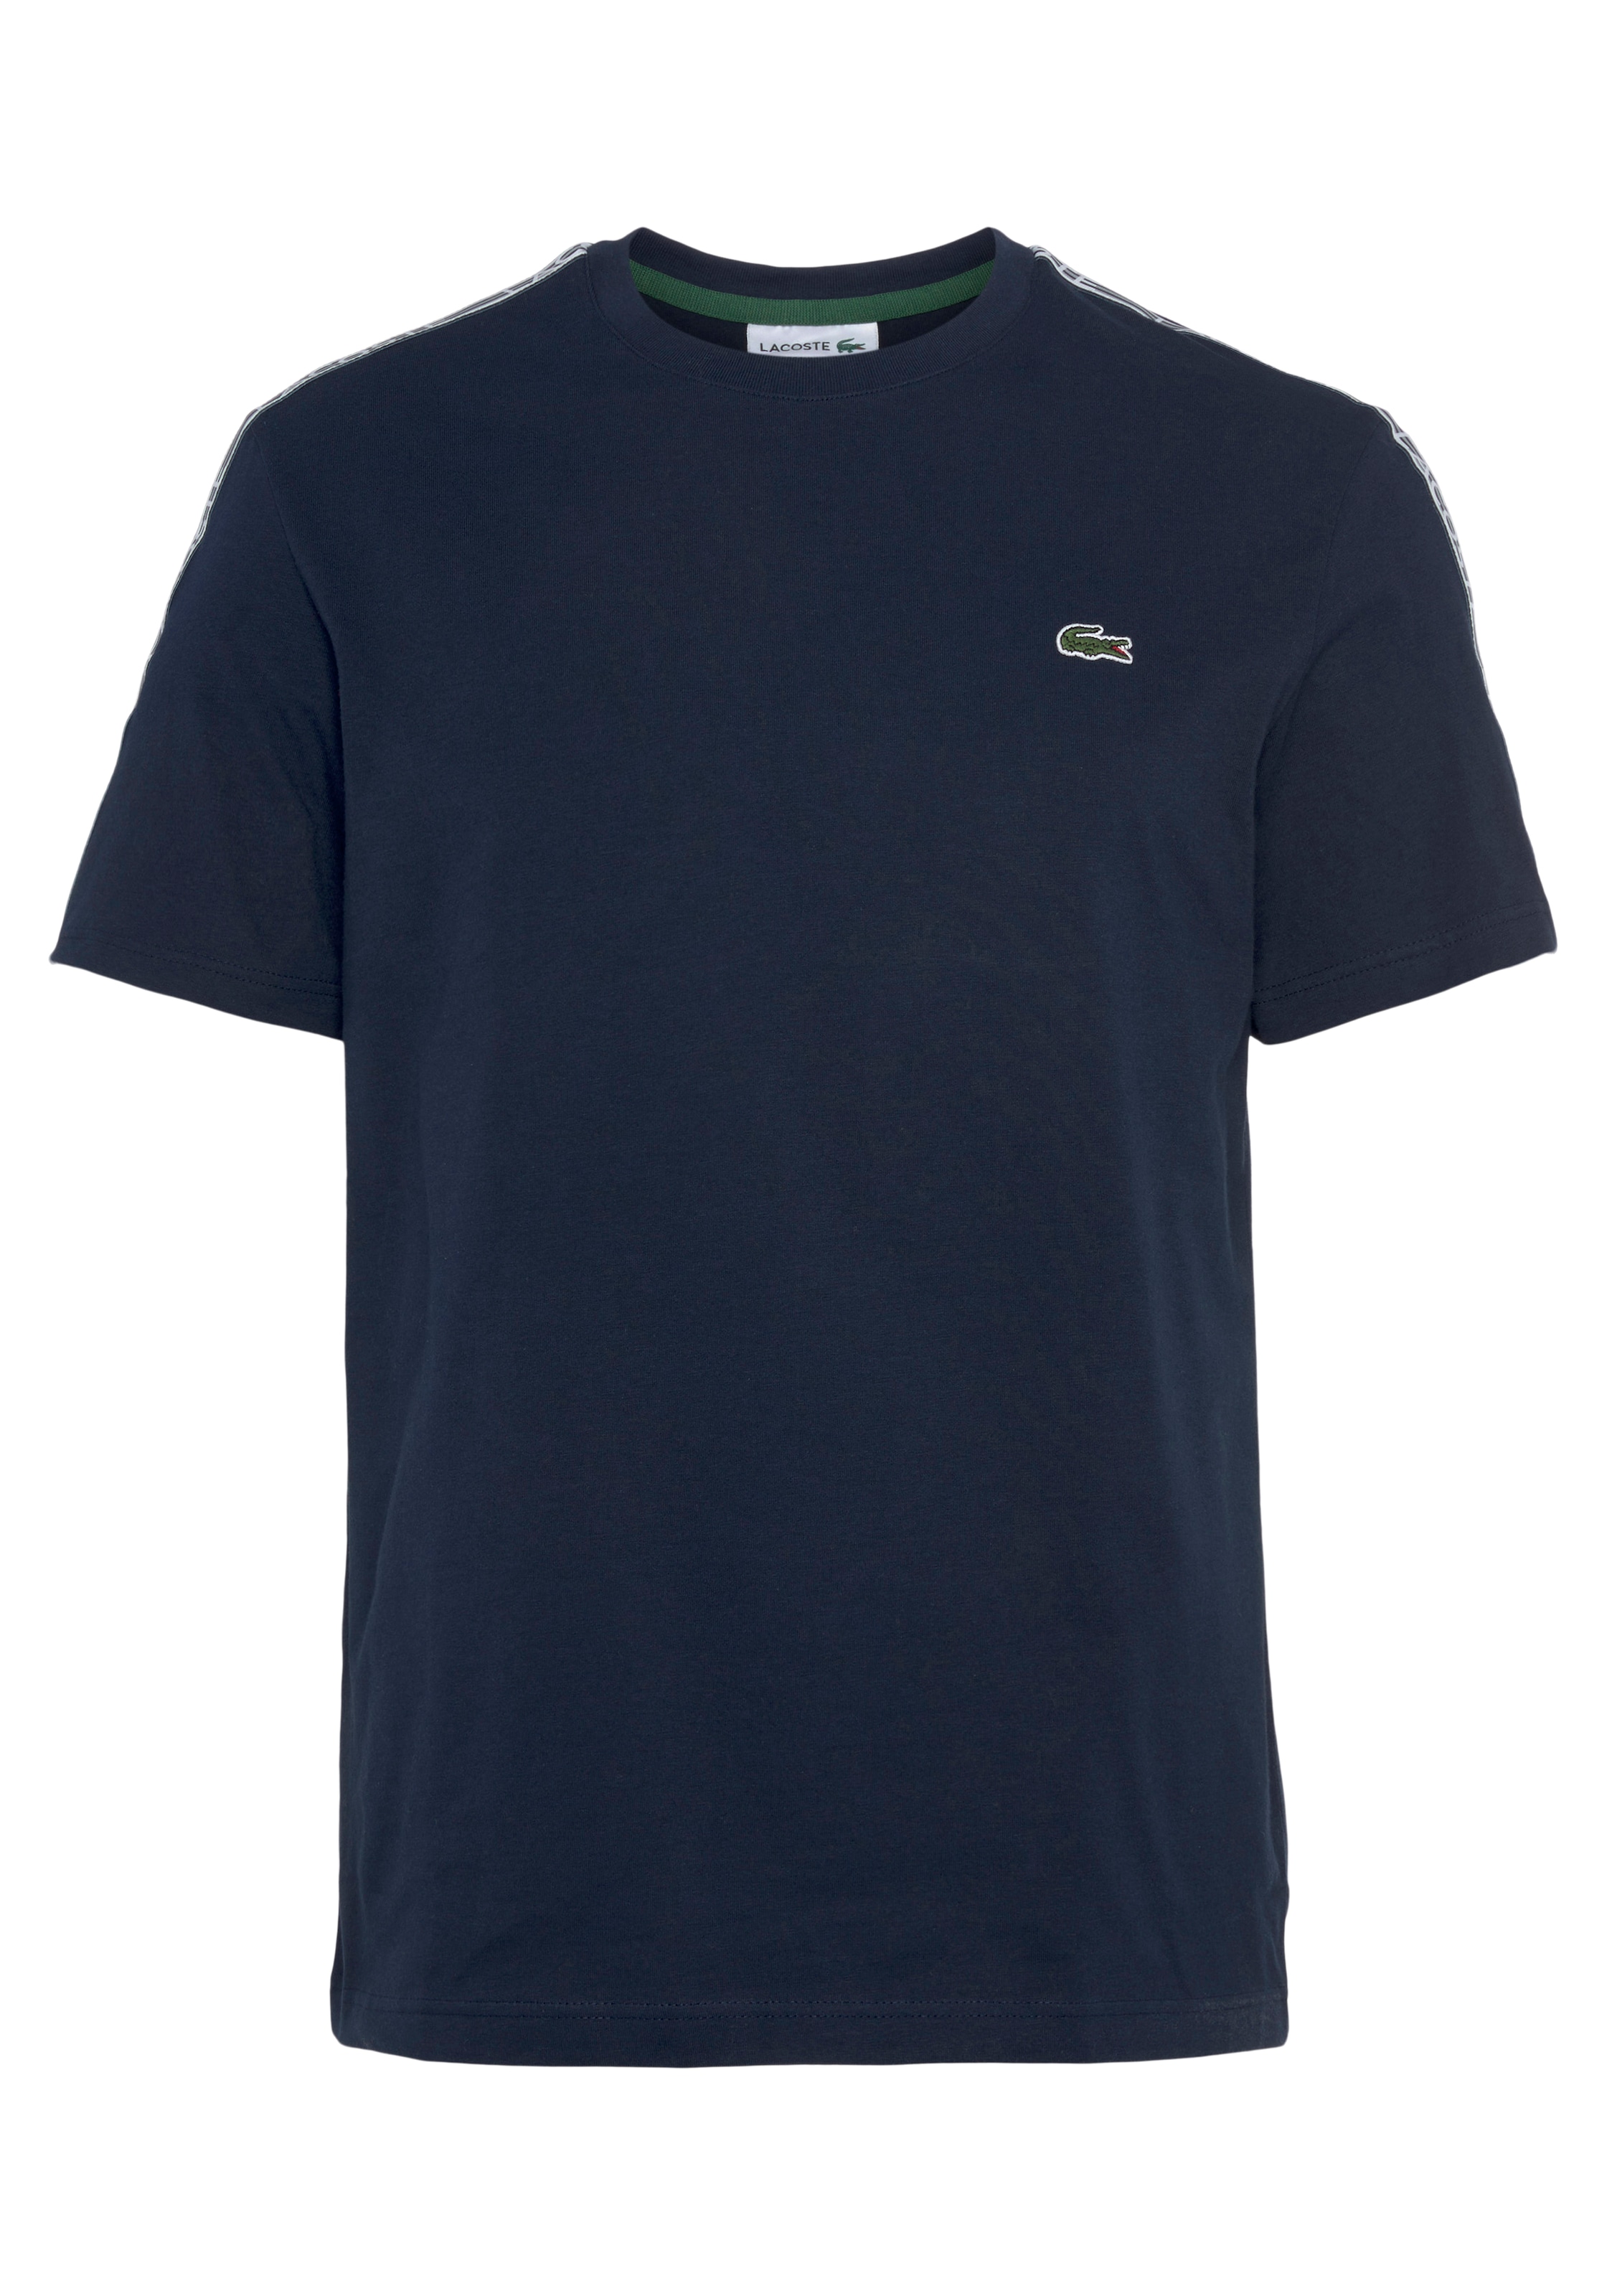 beschriftetem Lacoste mit online den T-Shirt, OTTO bestellen Kontrastband an Schultern bei